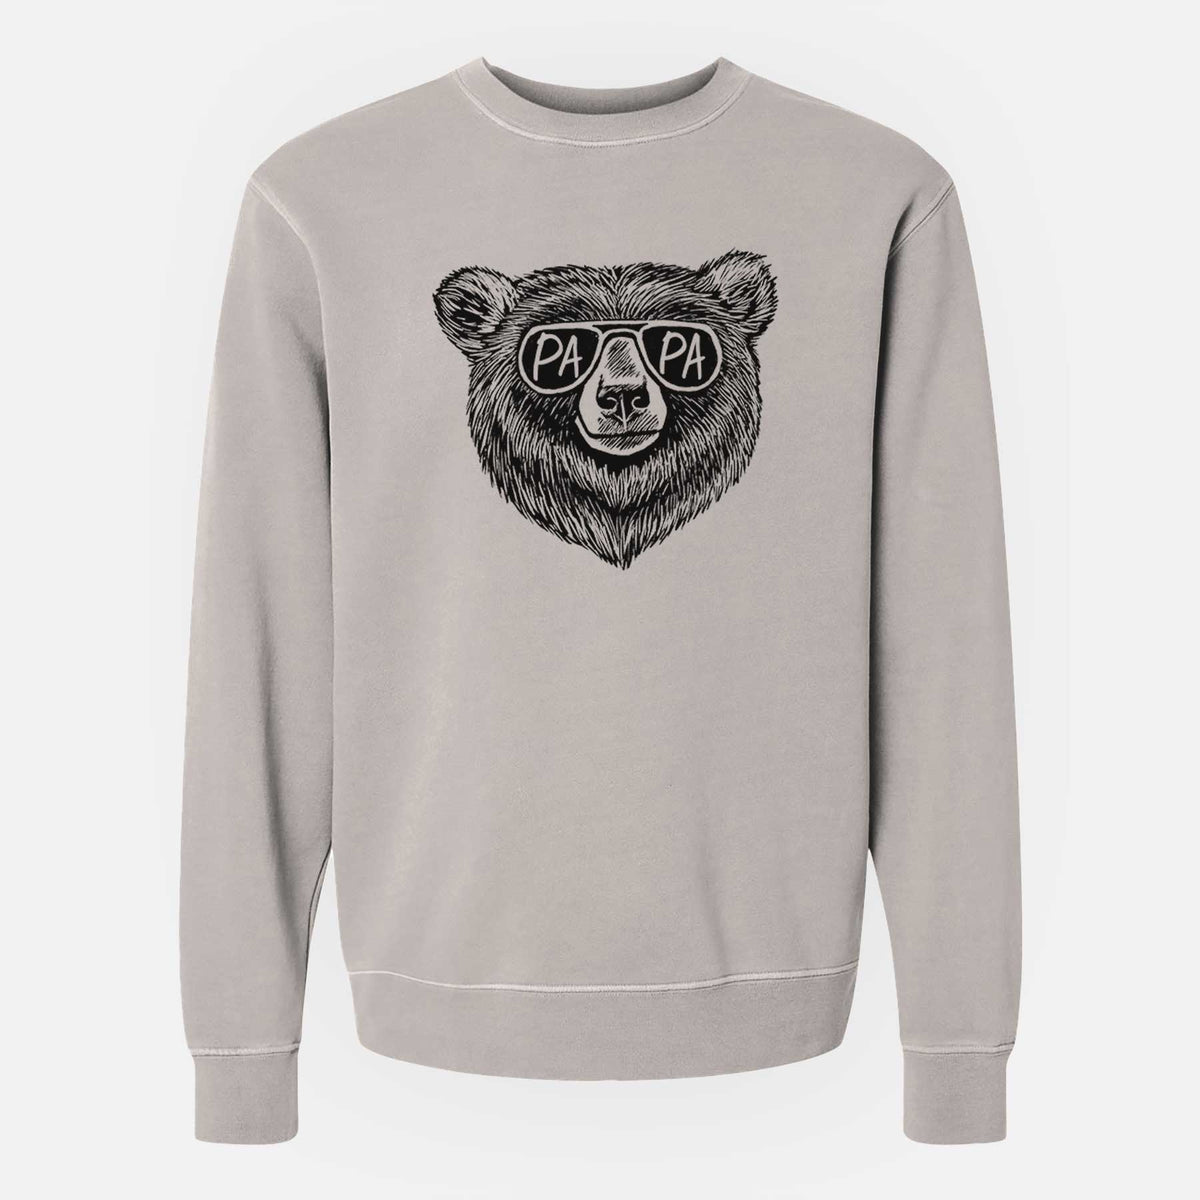 Papa Bear - Papa Glasses - Unisex Pigment Dyed Crew Sweatshirt